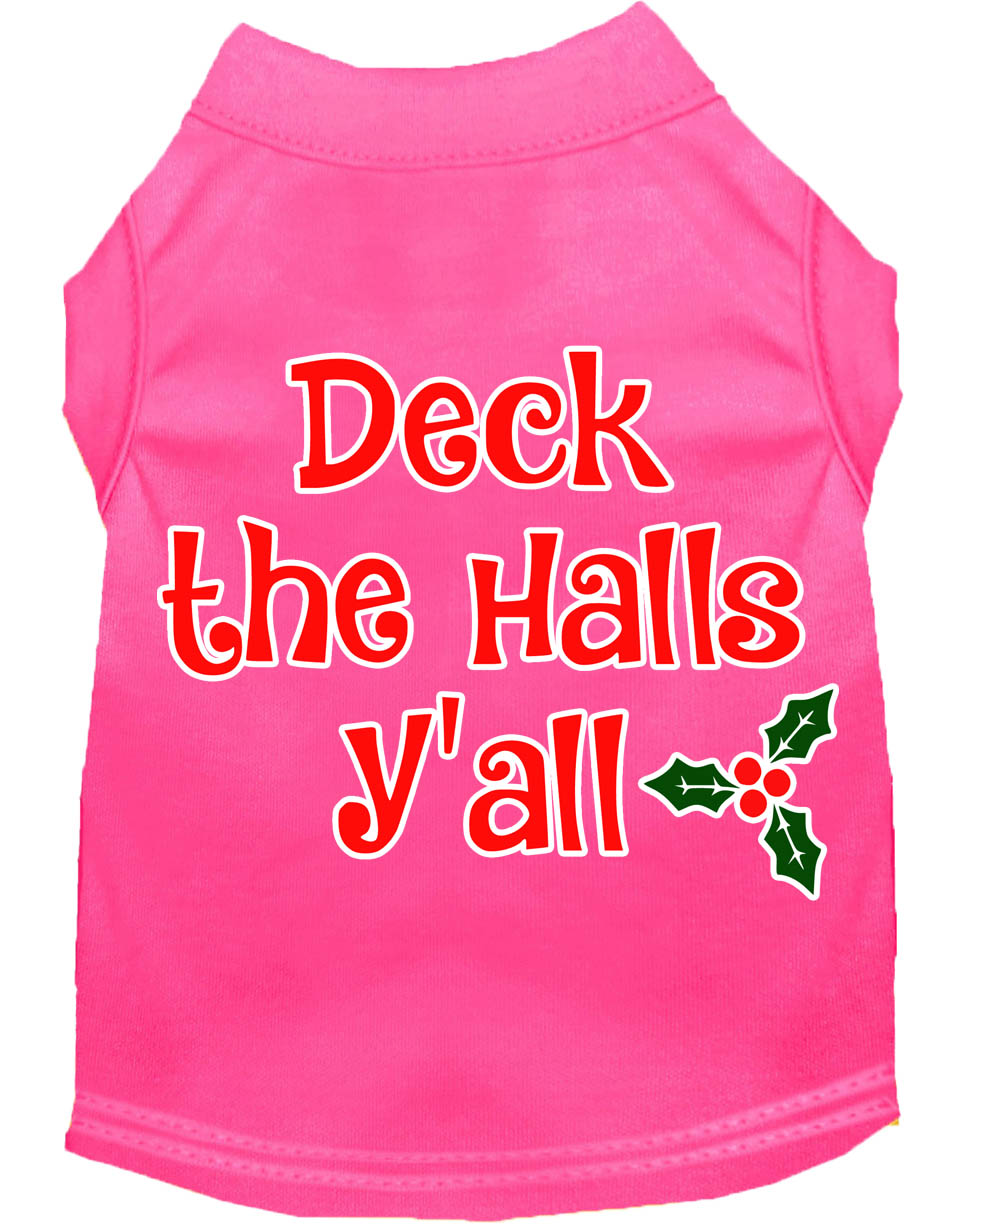 Deck the Halls Y'all Screen Print Dog Shirt Bright Pink Lg